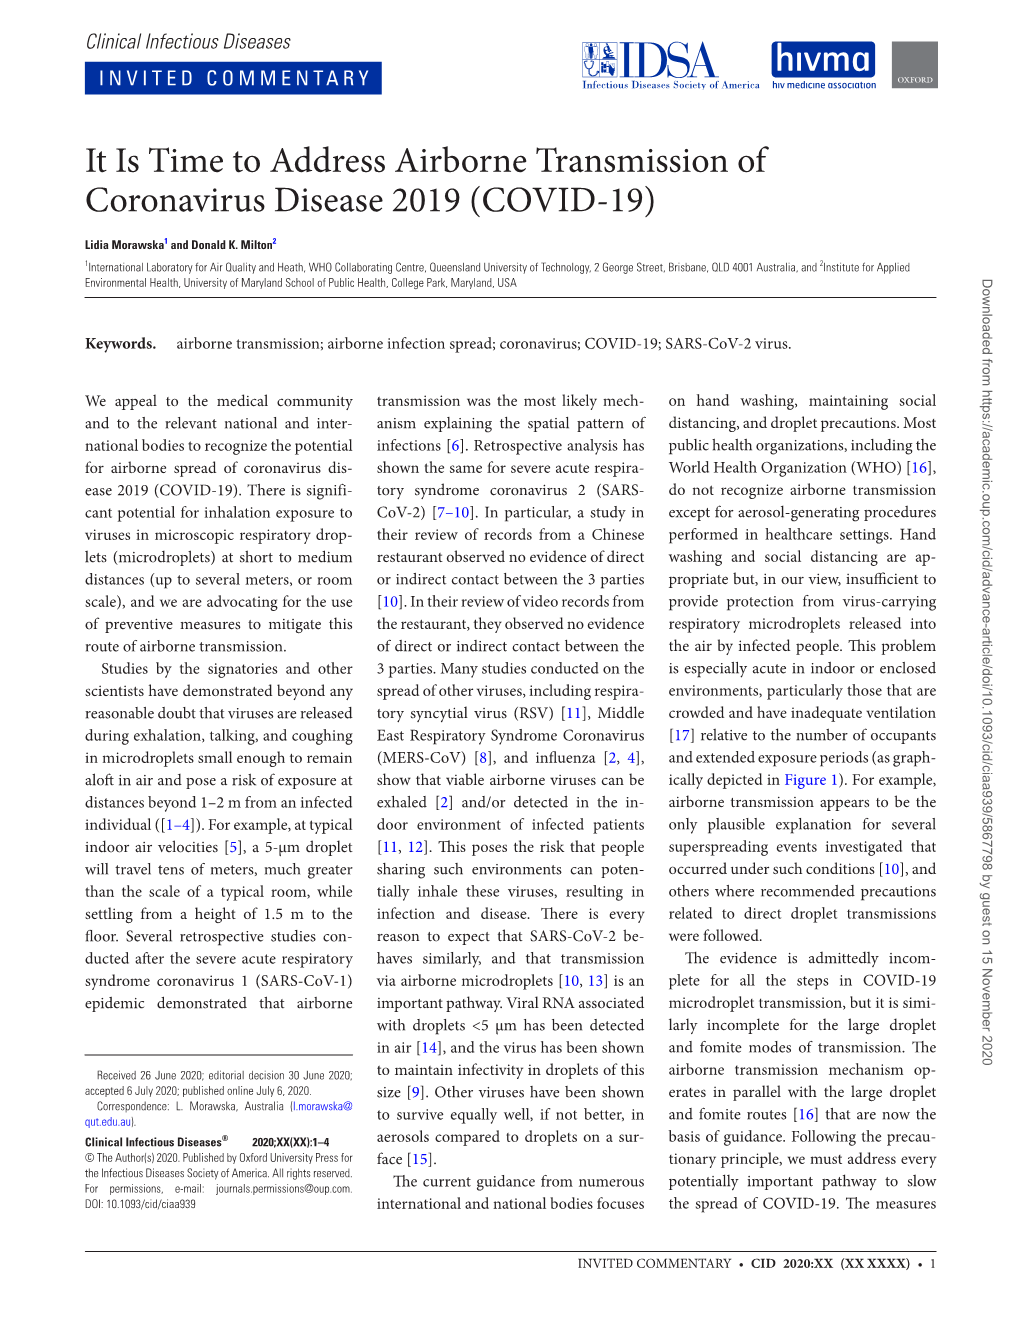 It Is Time to Address Airborne Transmission of Coronavirus Disease 2019 (COVID-19)